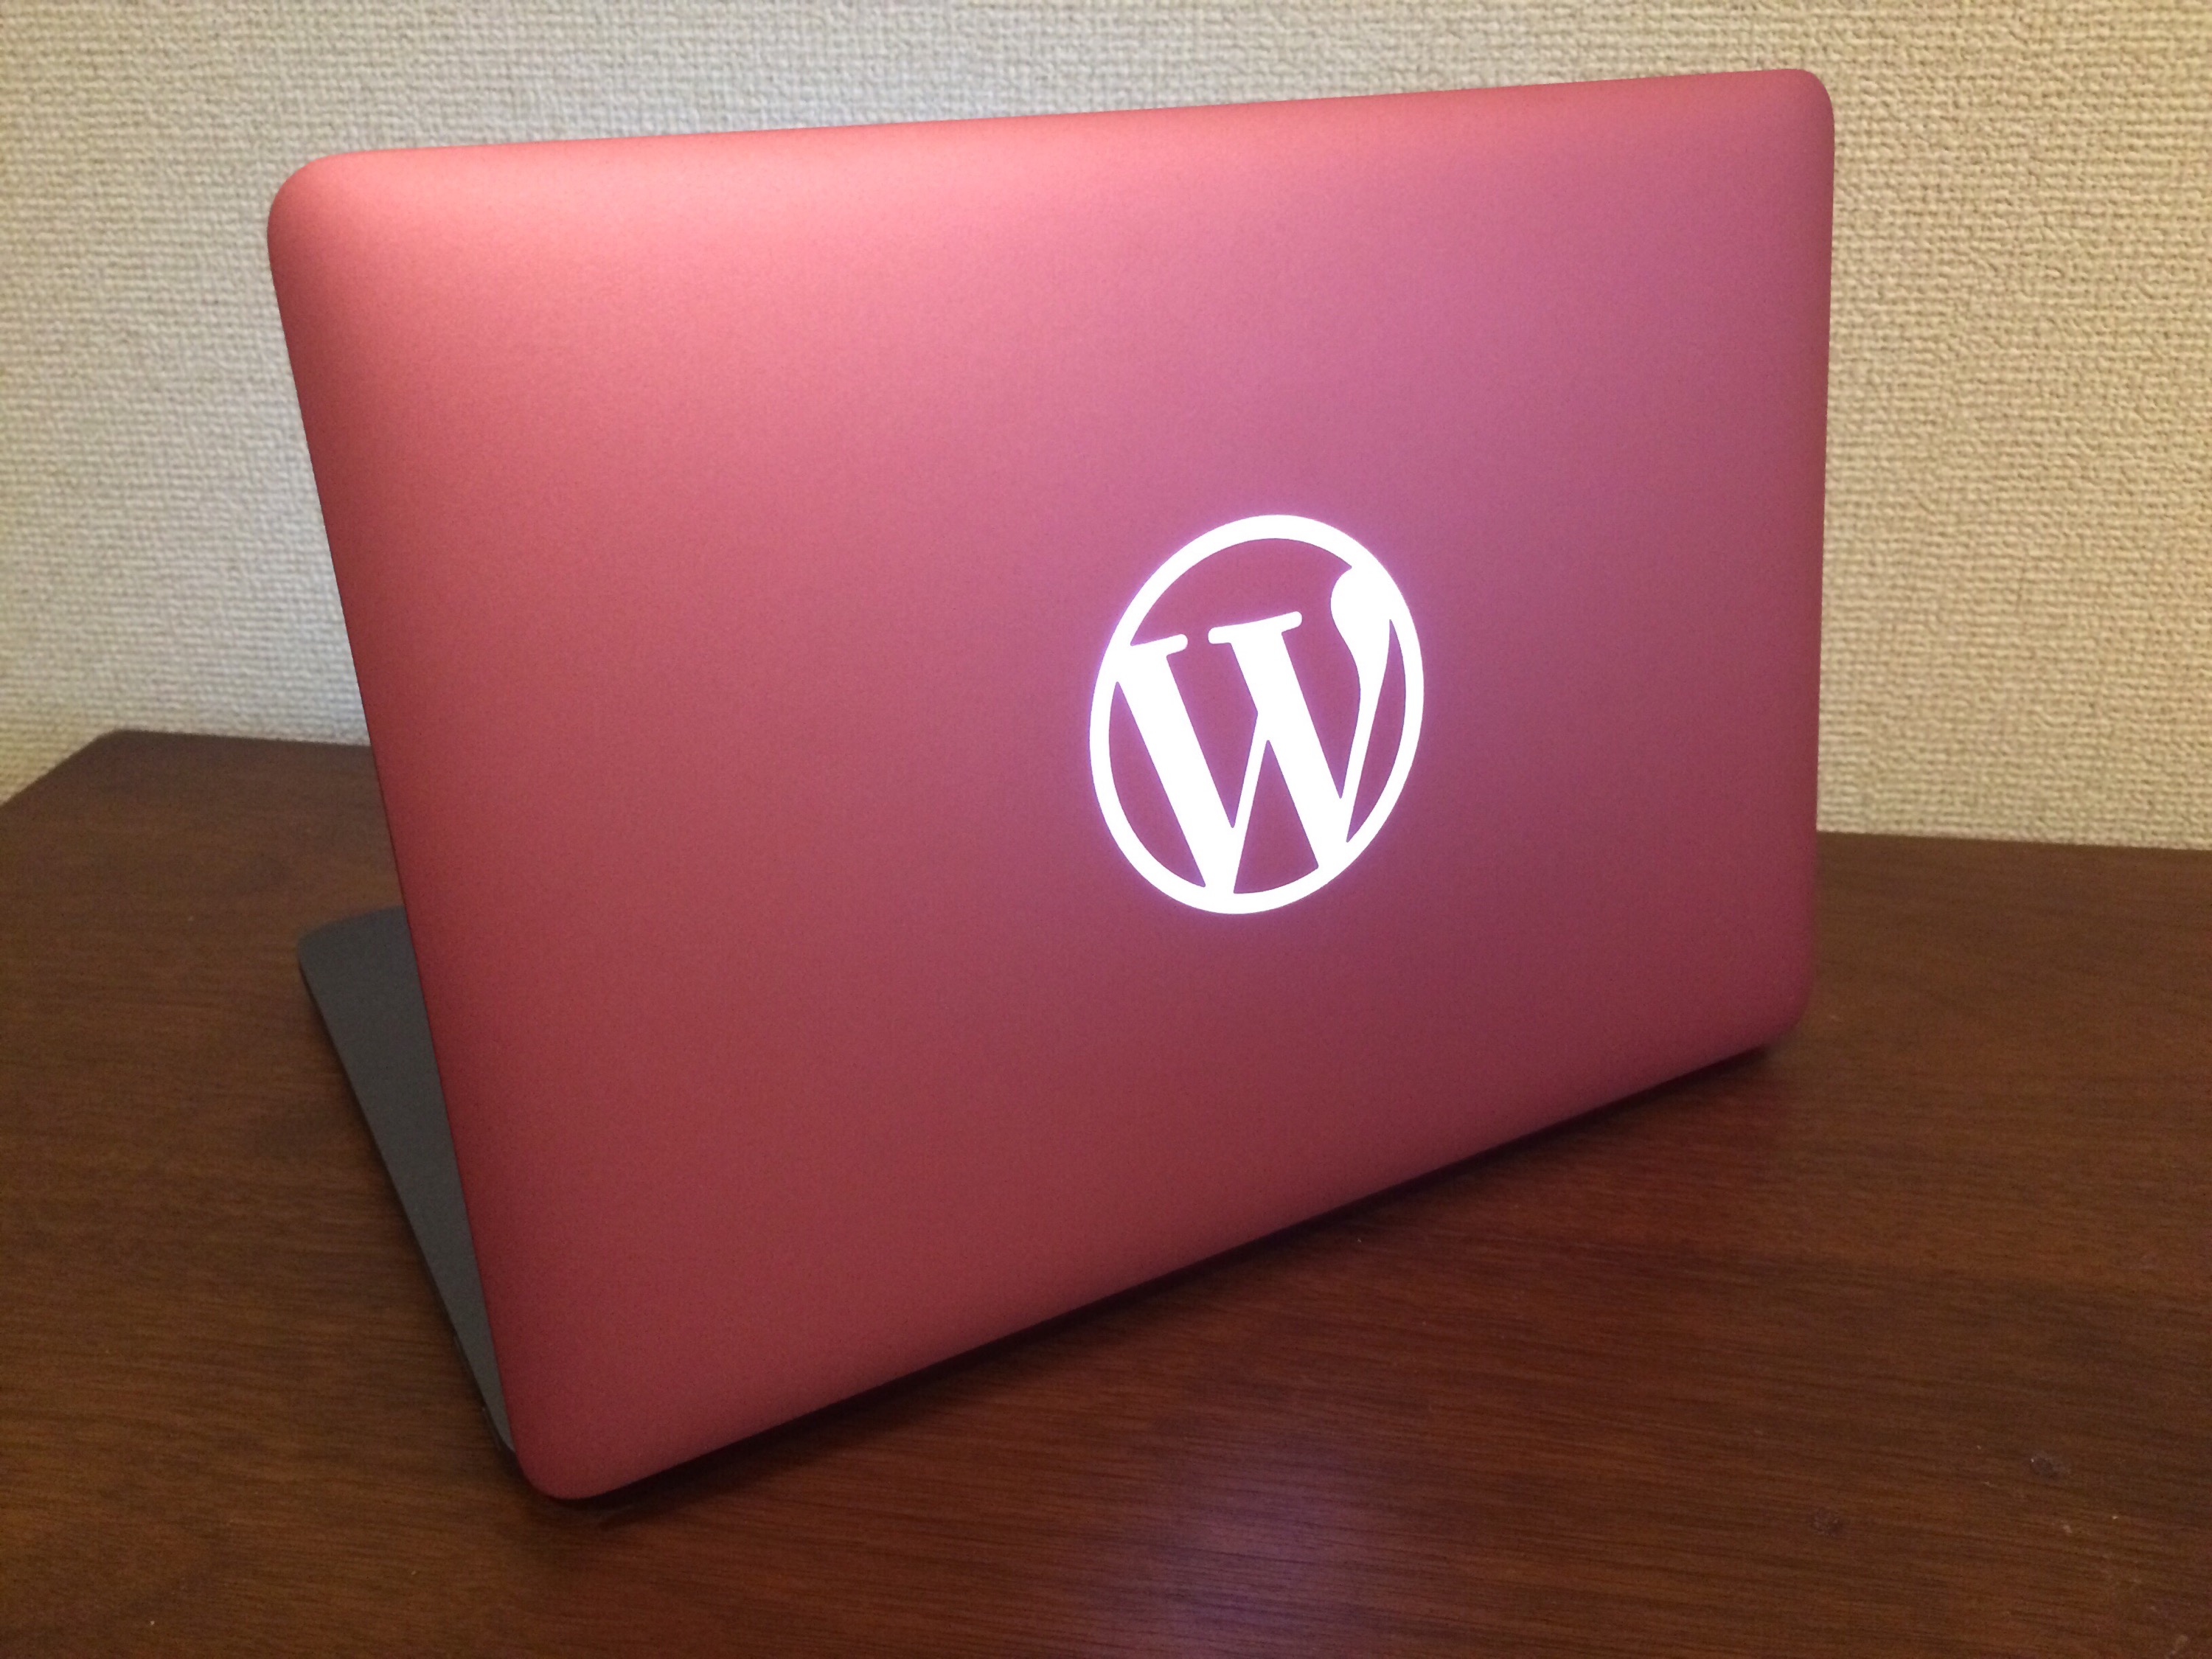 WordPress ロゴ入り、ピンク×グレーの MacBook Pro